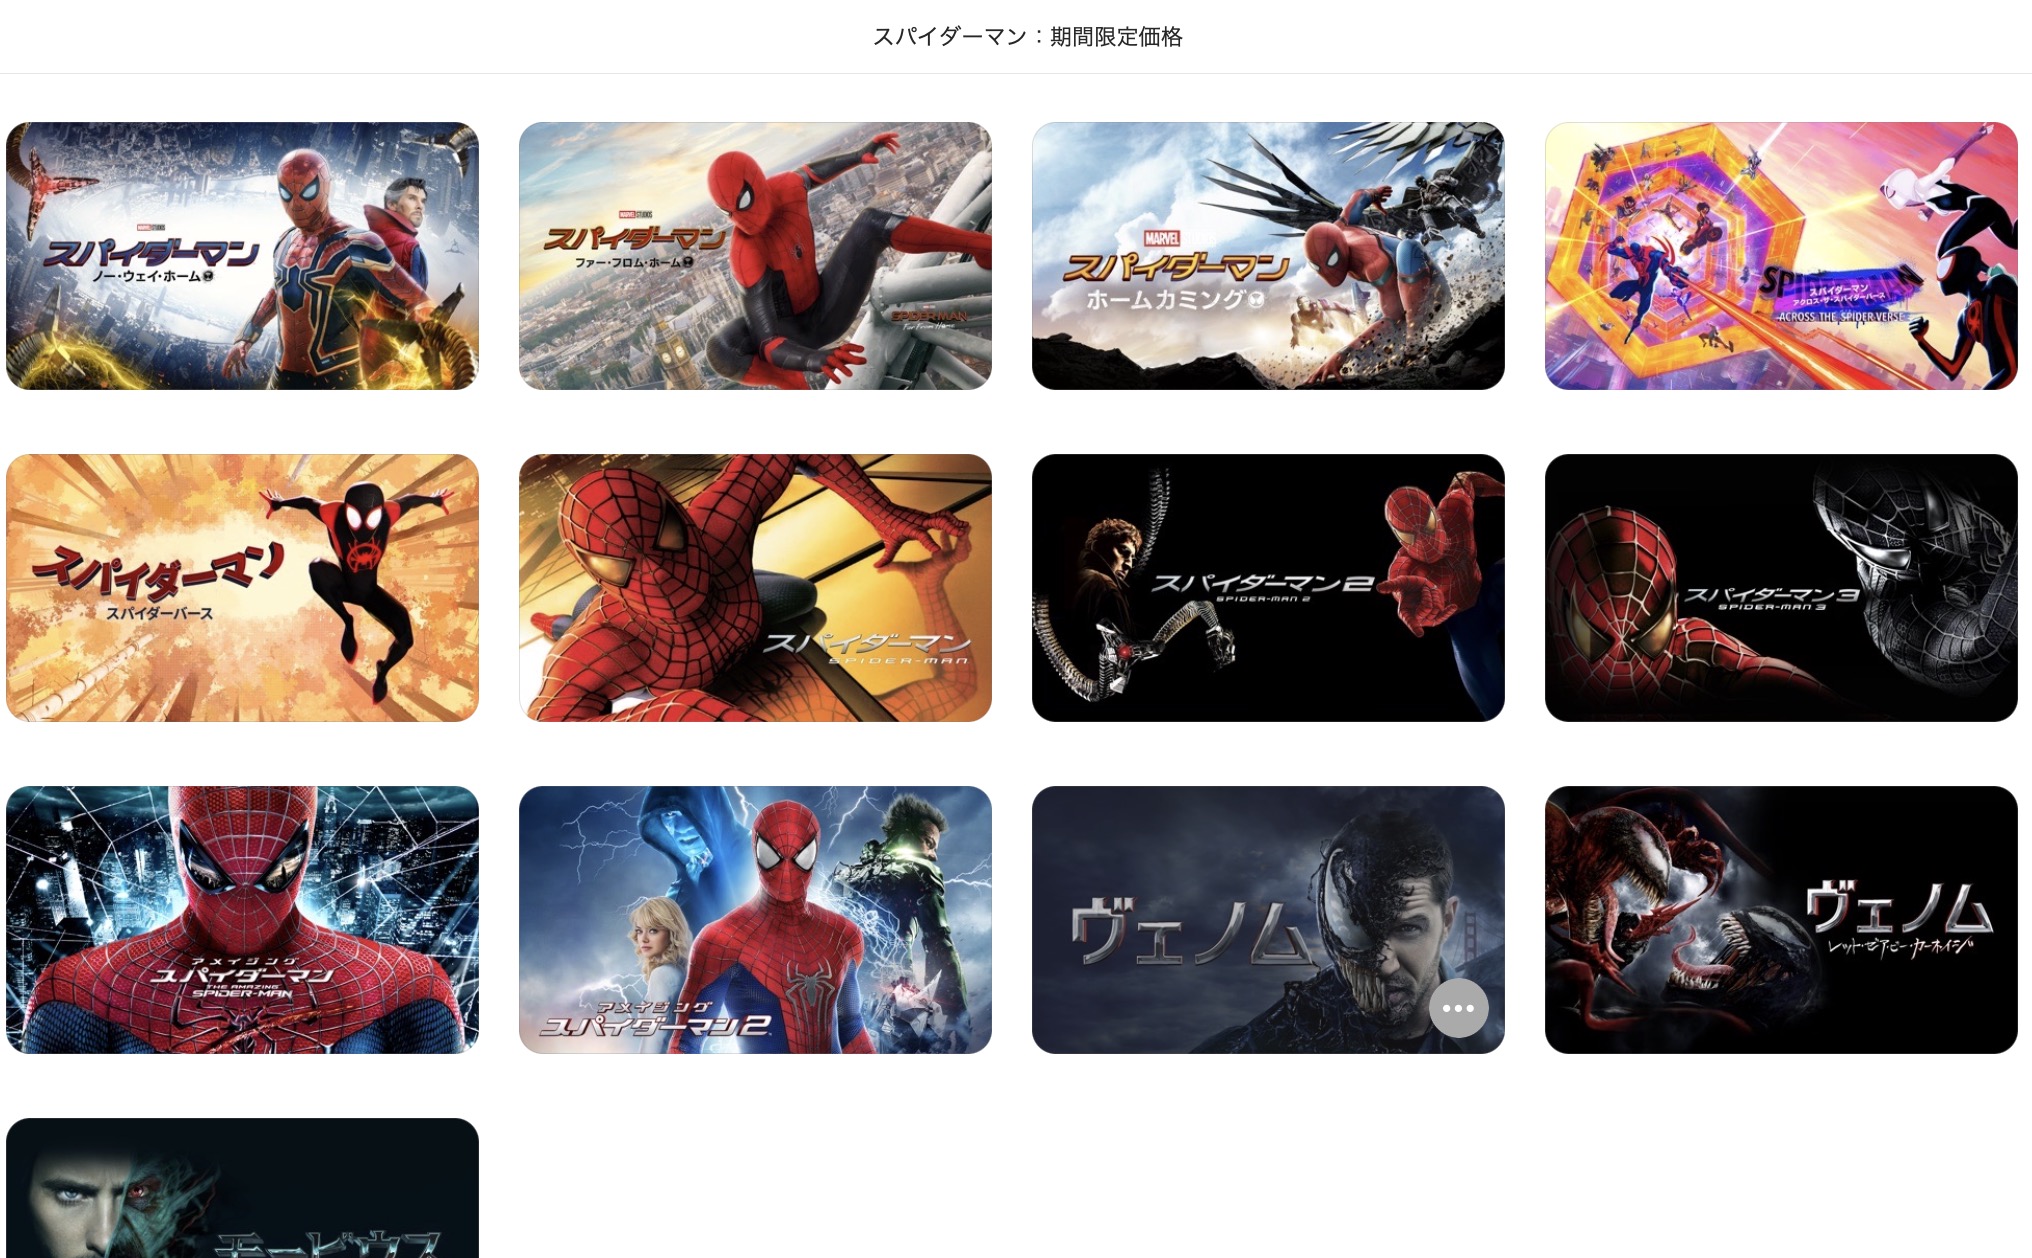 【iTunes Store】「スパイダーマン」期間限定価格